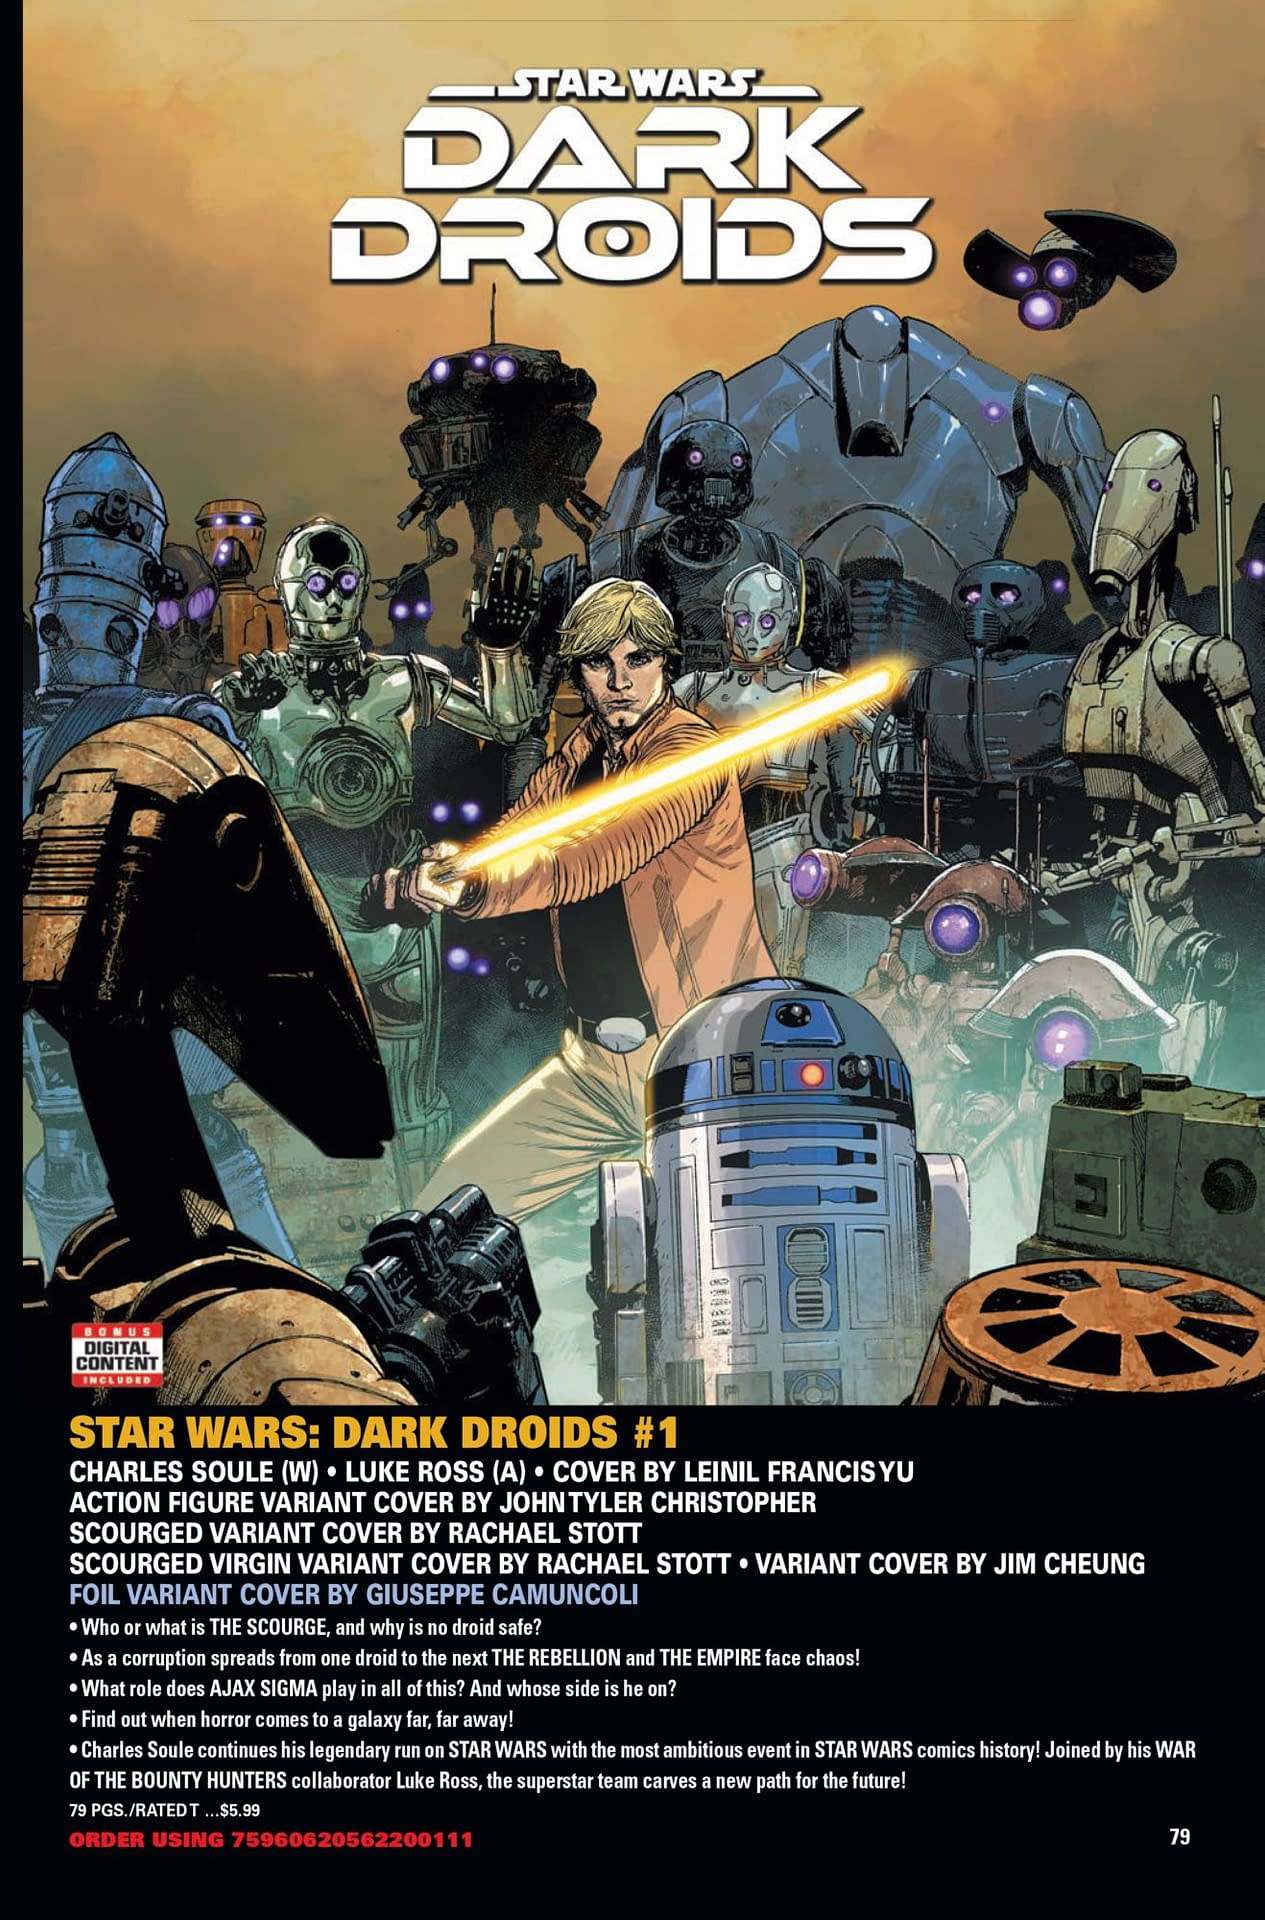 Star Wars #3  Social Comics